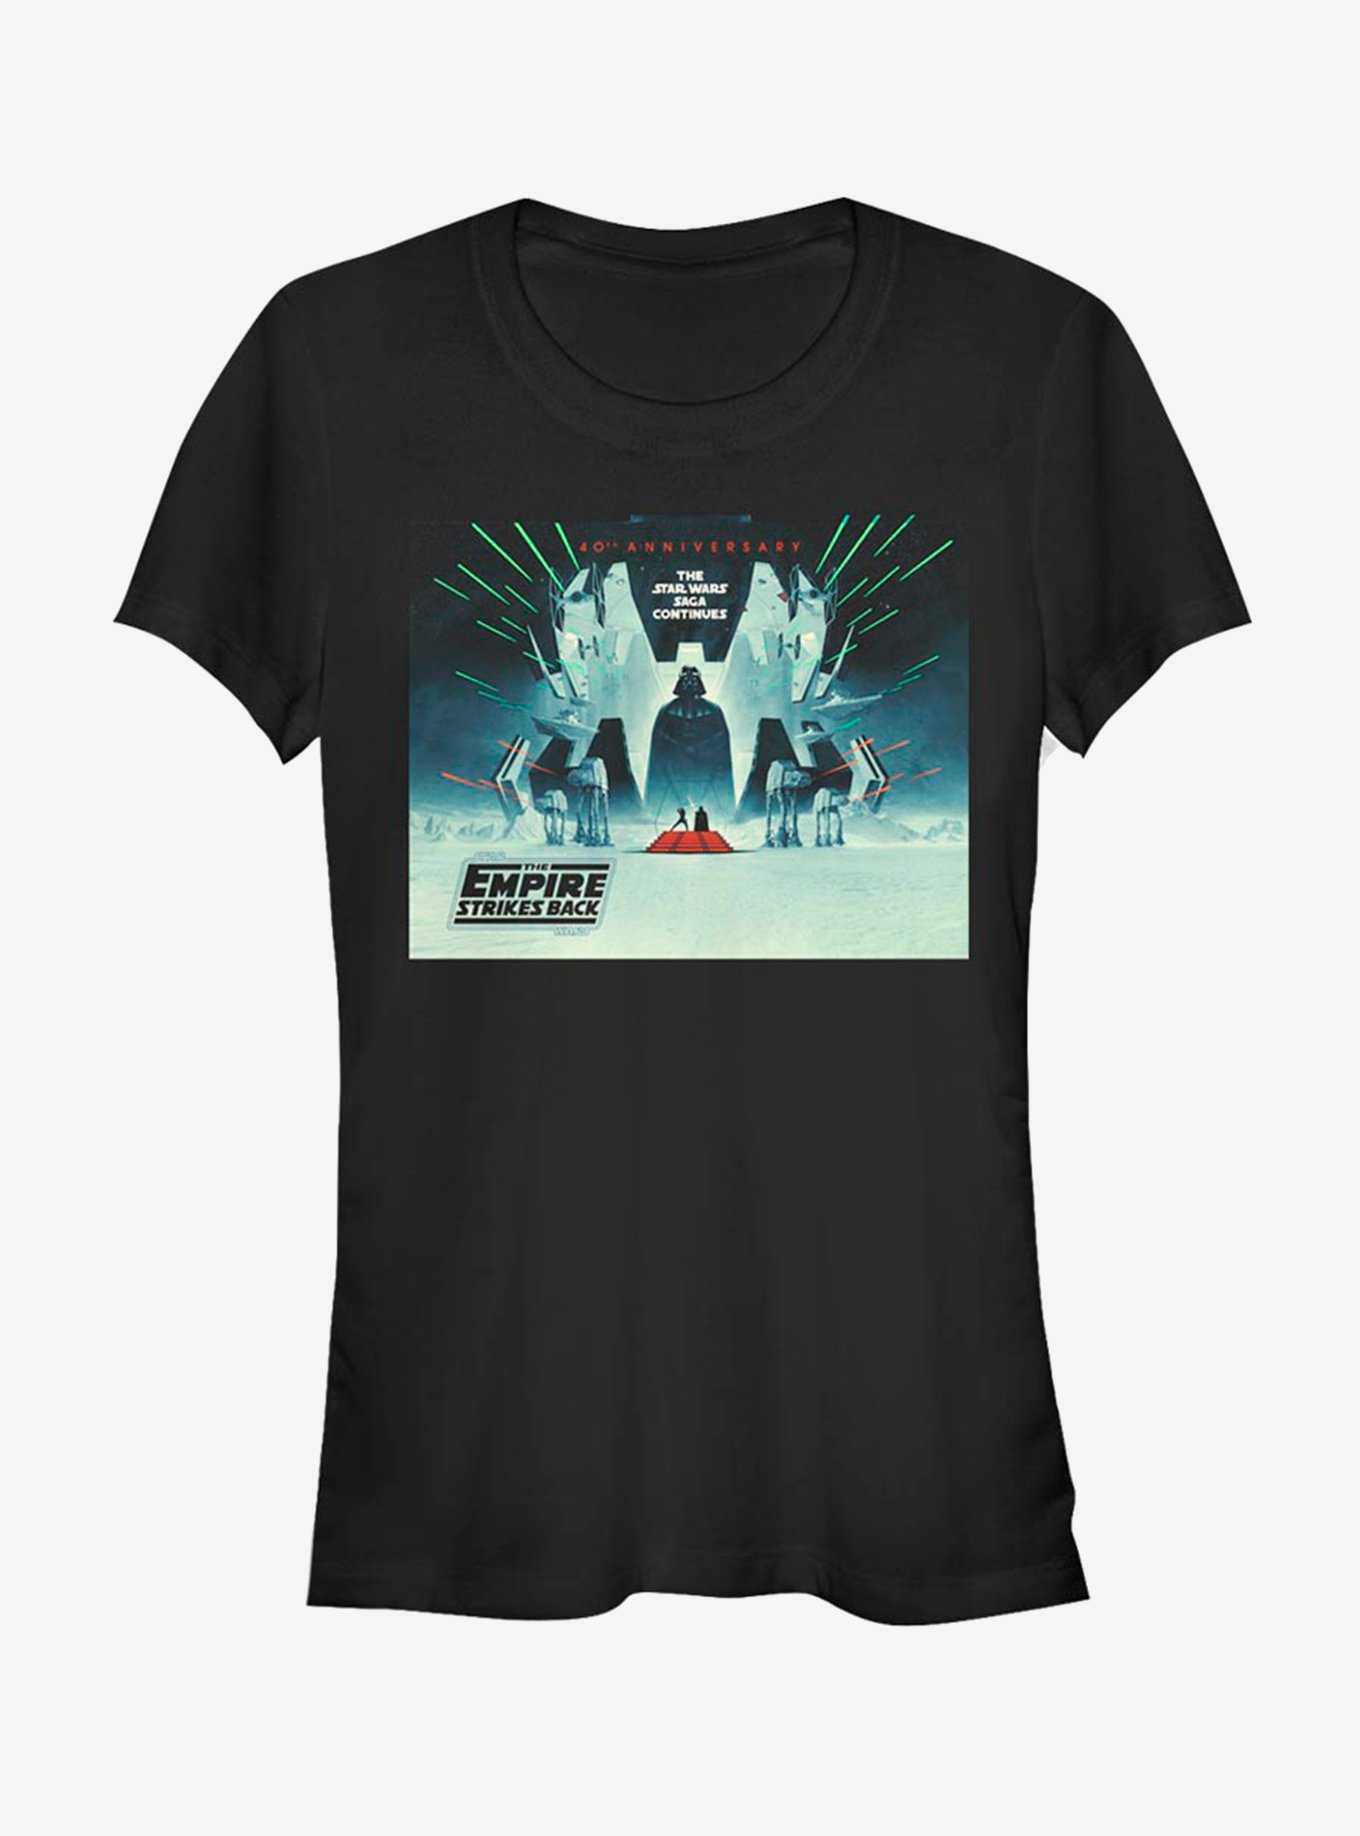 Star Wars Episode V The Empire Strikes Back 40th Anniversary Poster Girls T-Shirt, , hi-res